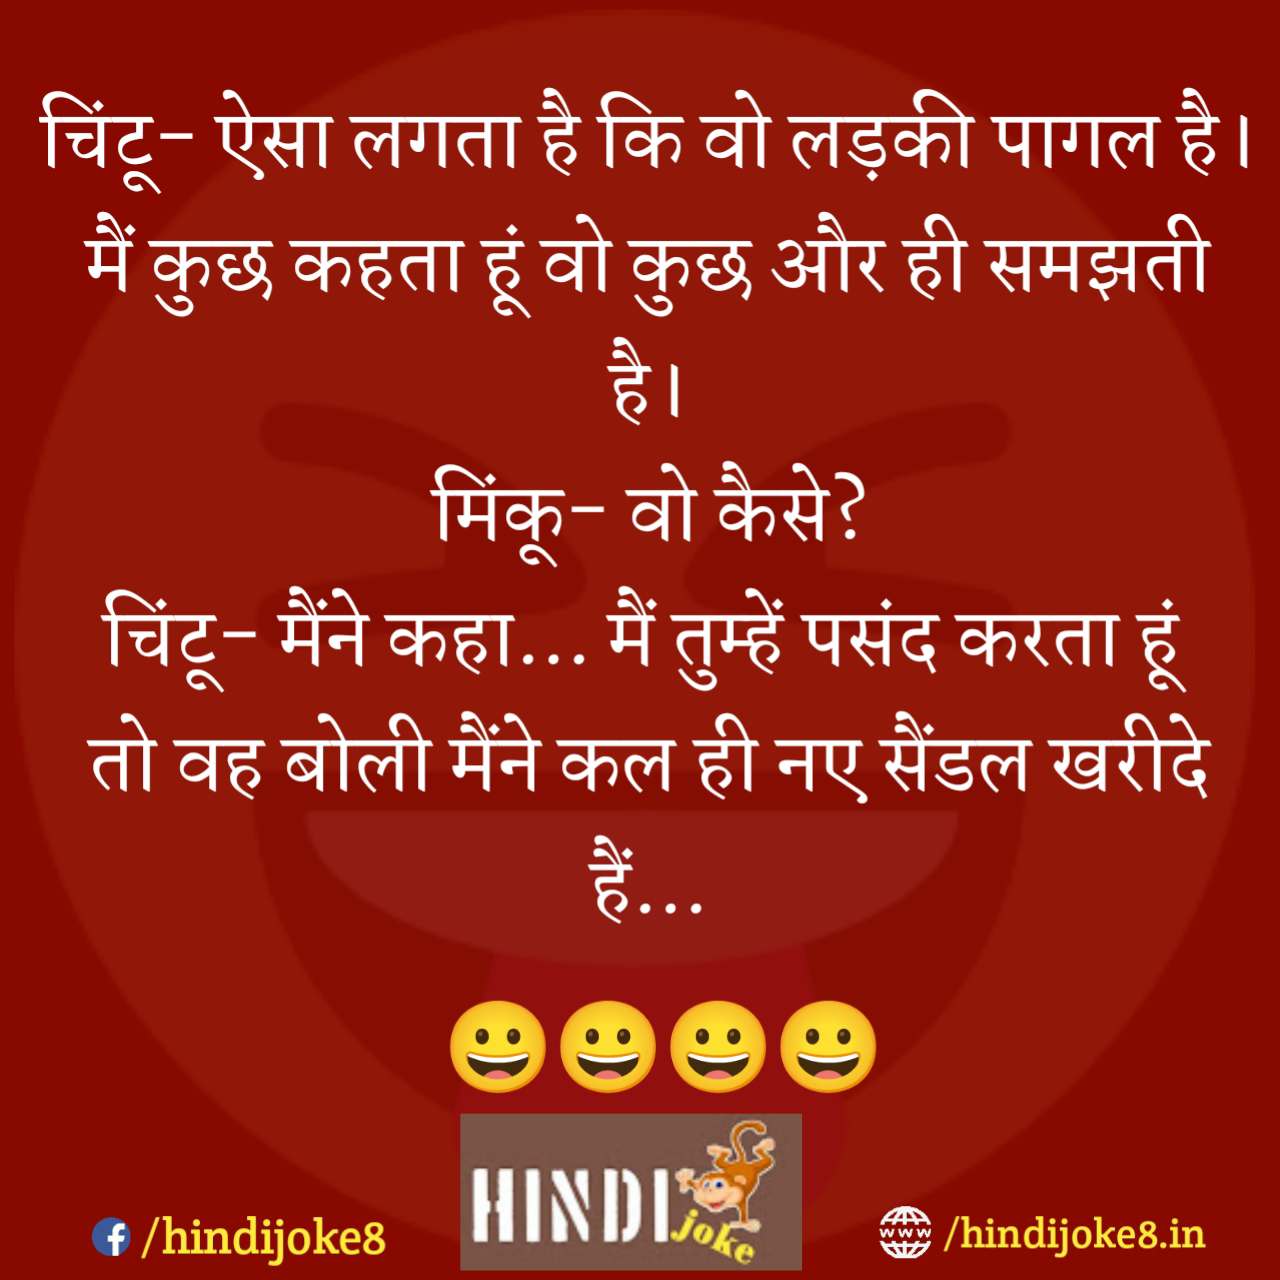 1853+ Chutkule In Hindi Images Wallpaper HD Free download | Funny jokes in  hindi, Jokes in hindi, Funny statuses